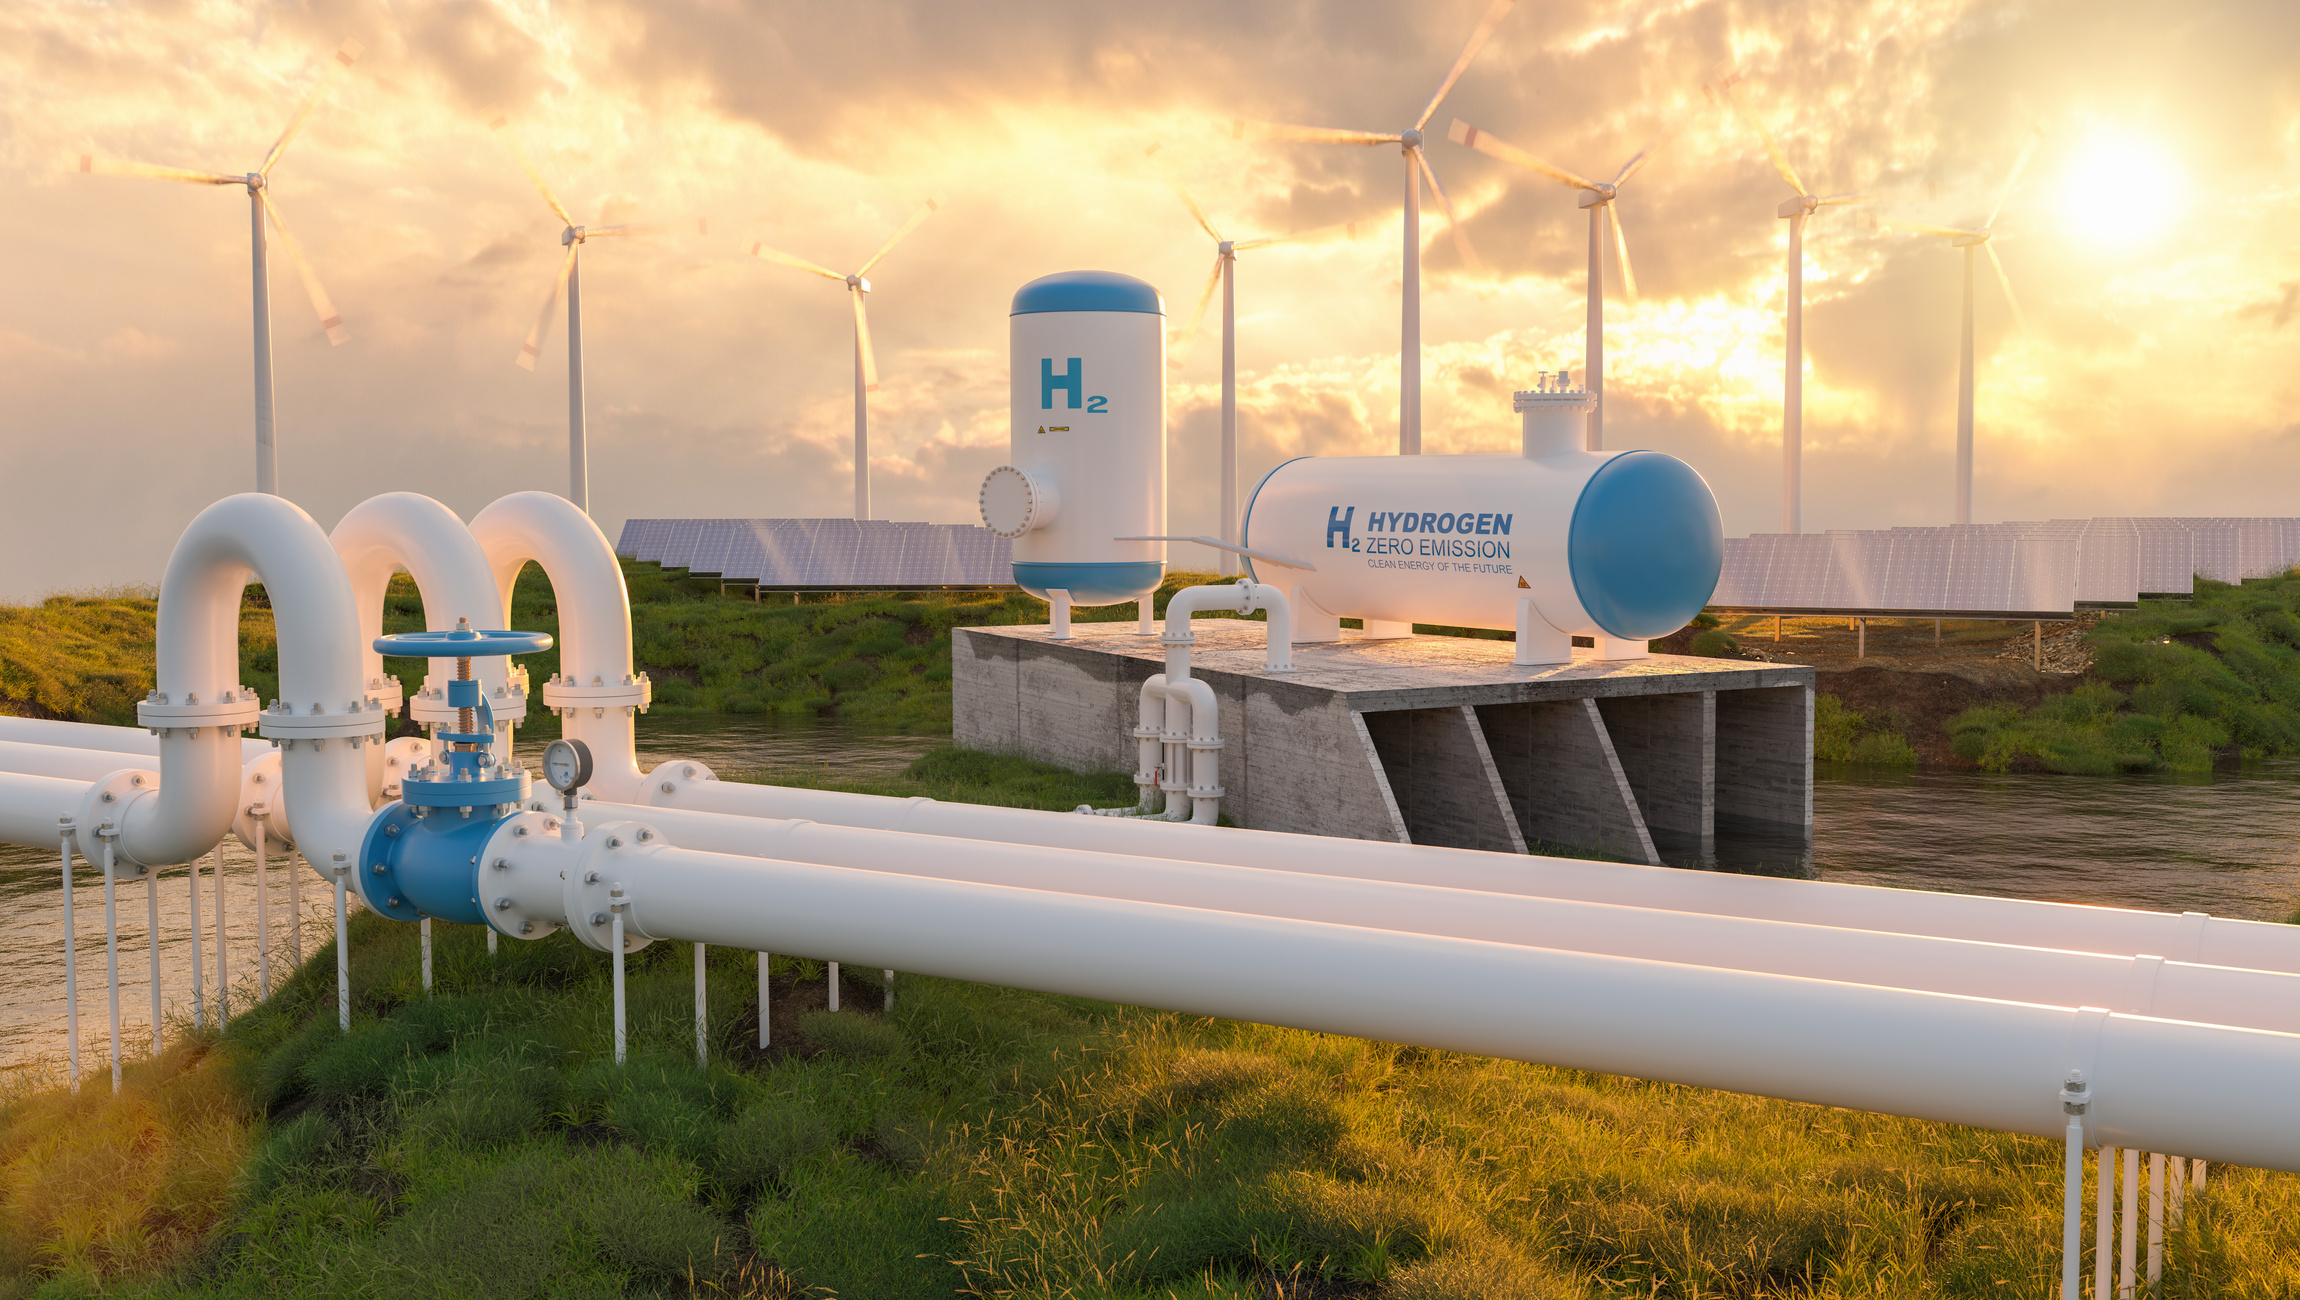 Hydrogen gas pipeline renewable energy production - hydrogen pow